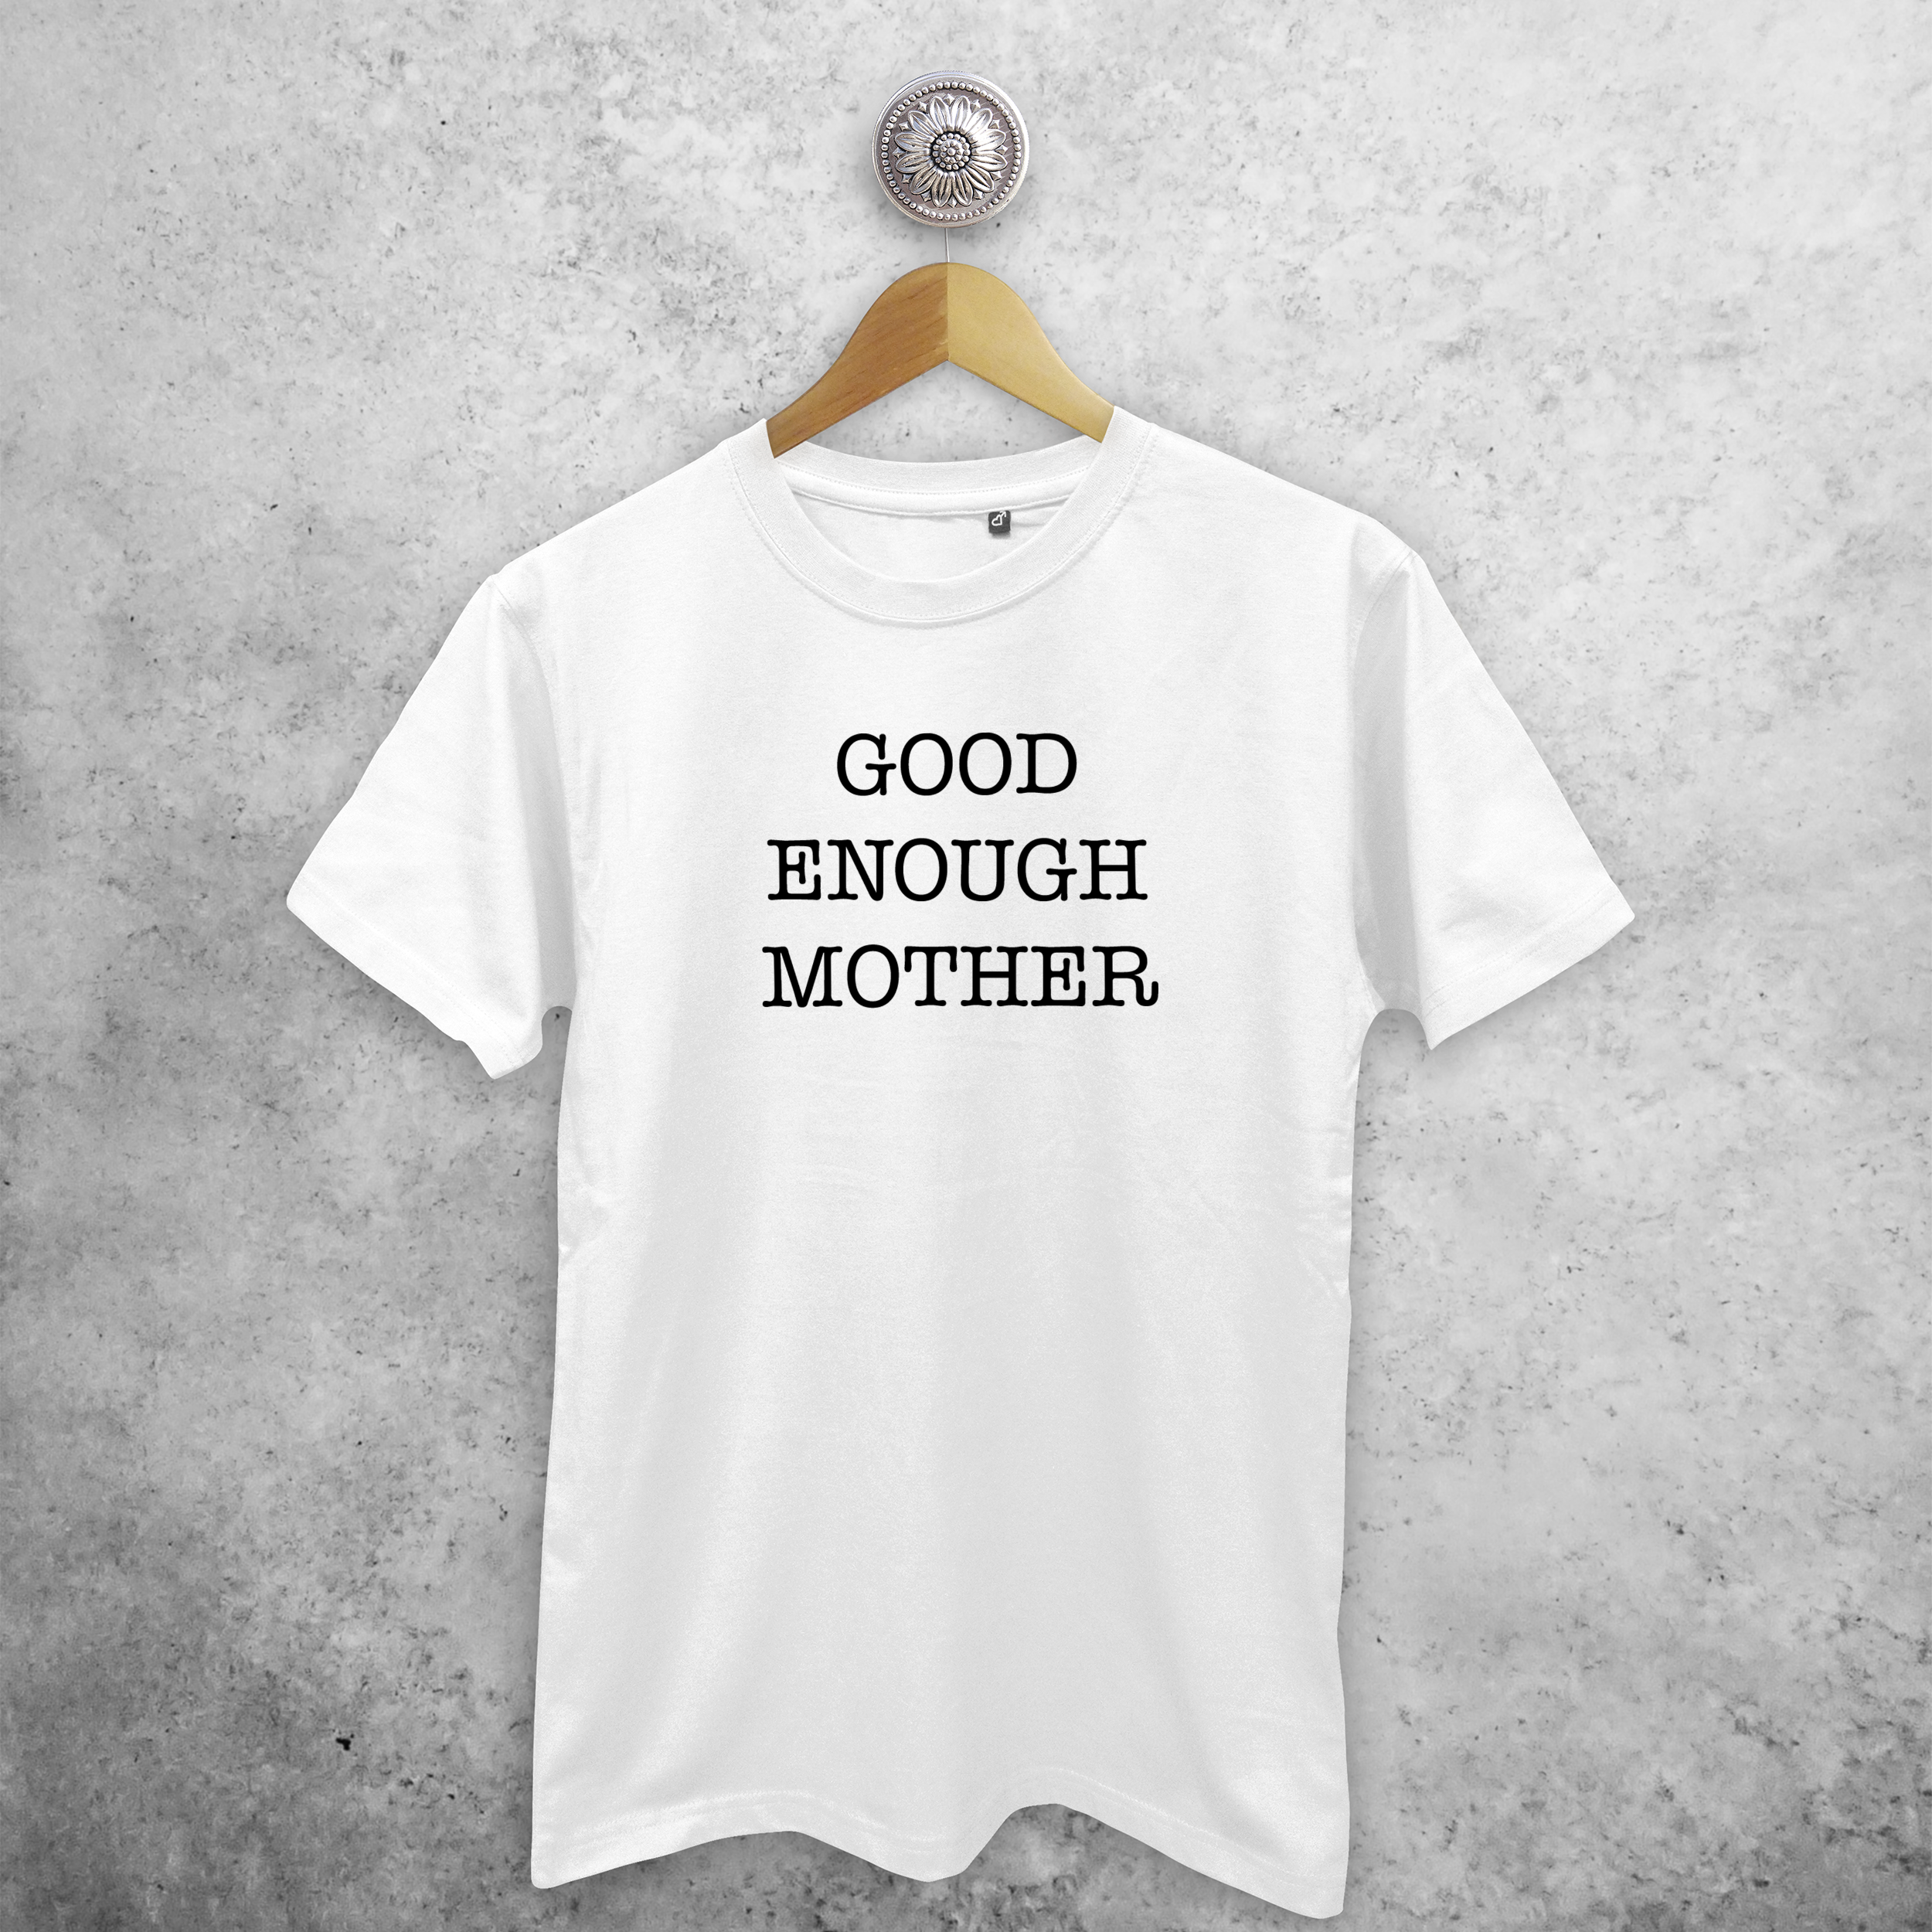 'Good enough mother' volwassene shirt